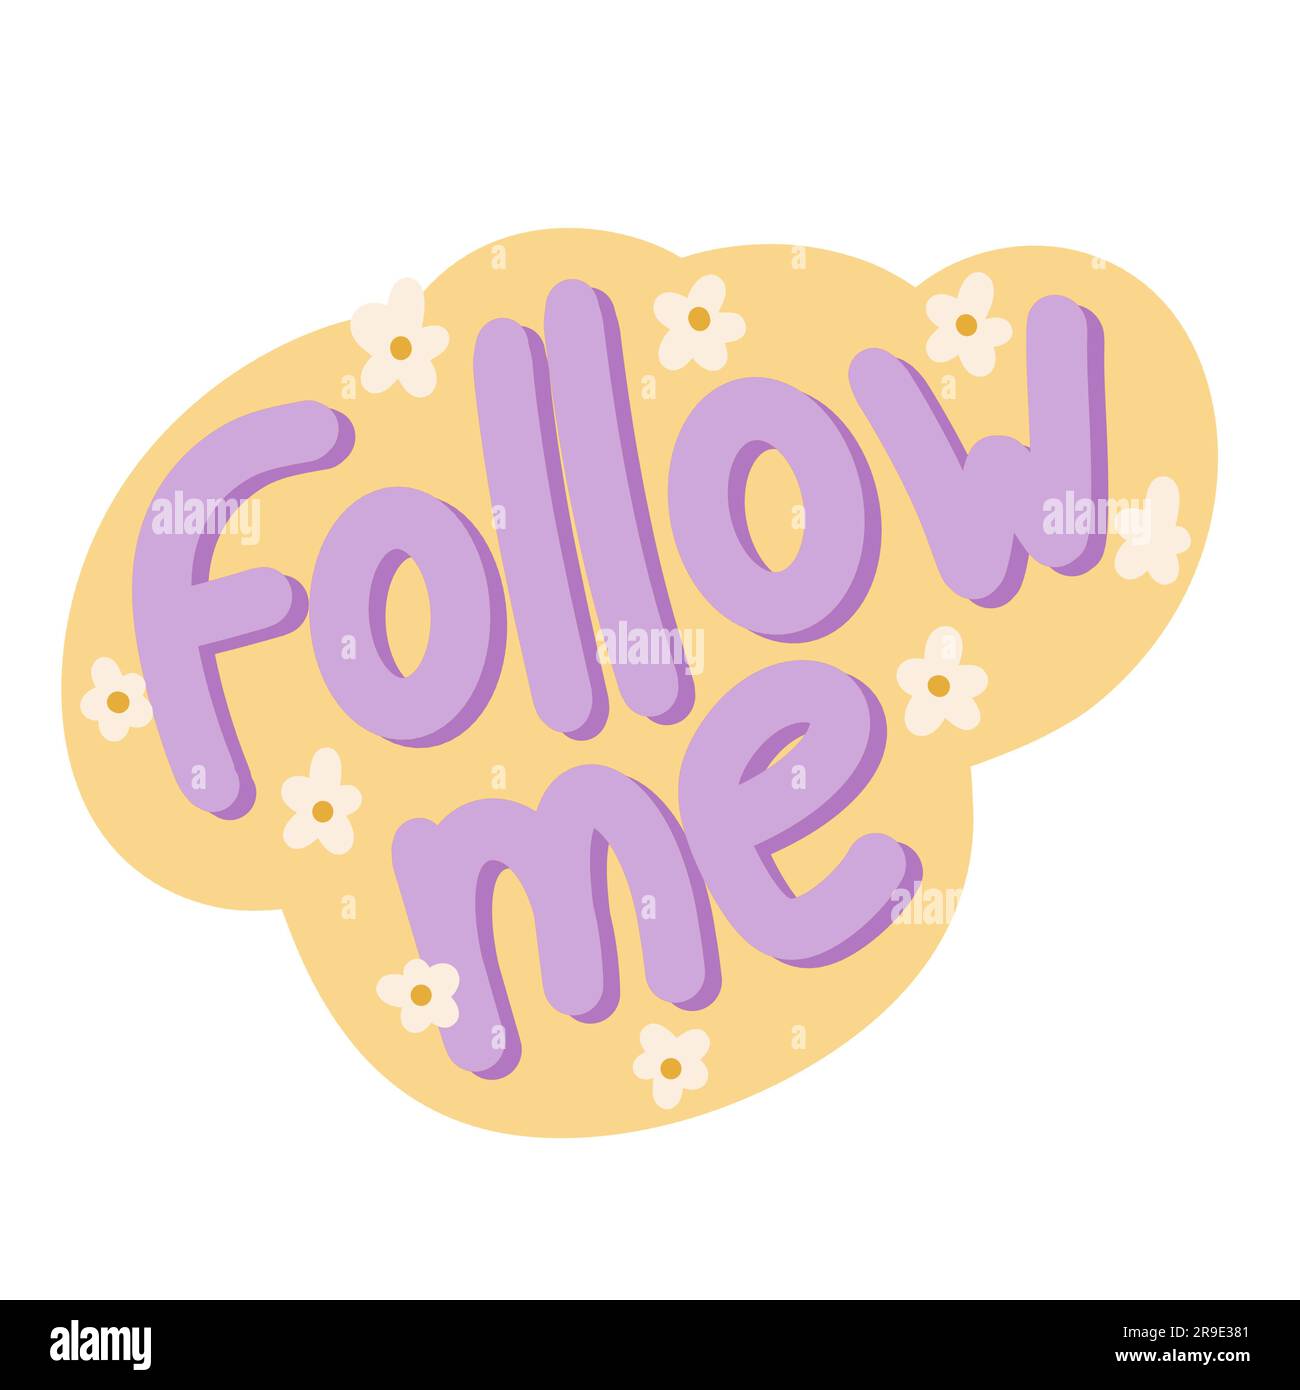 Follow me Stickers - Free social media Stickers